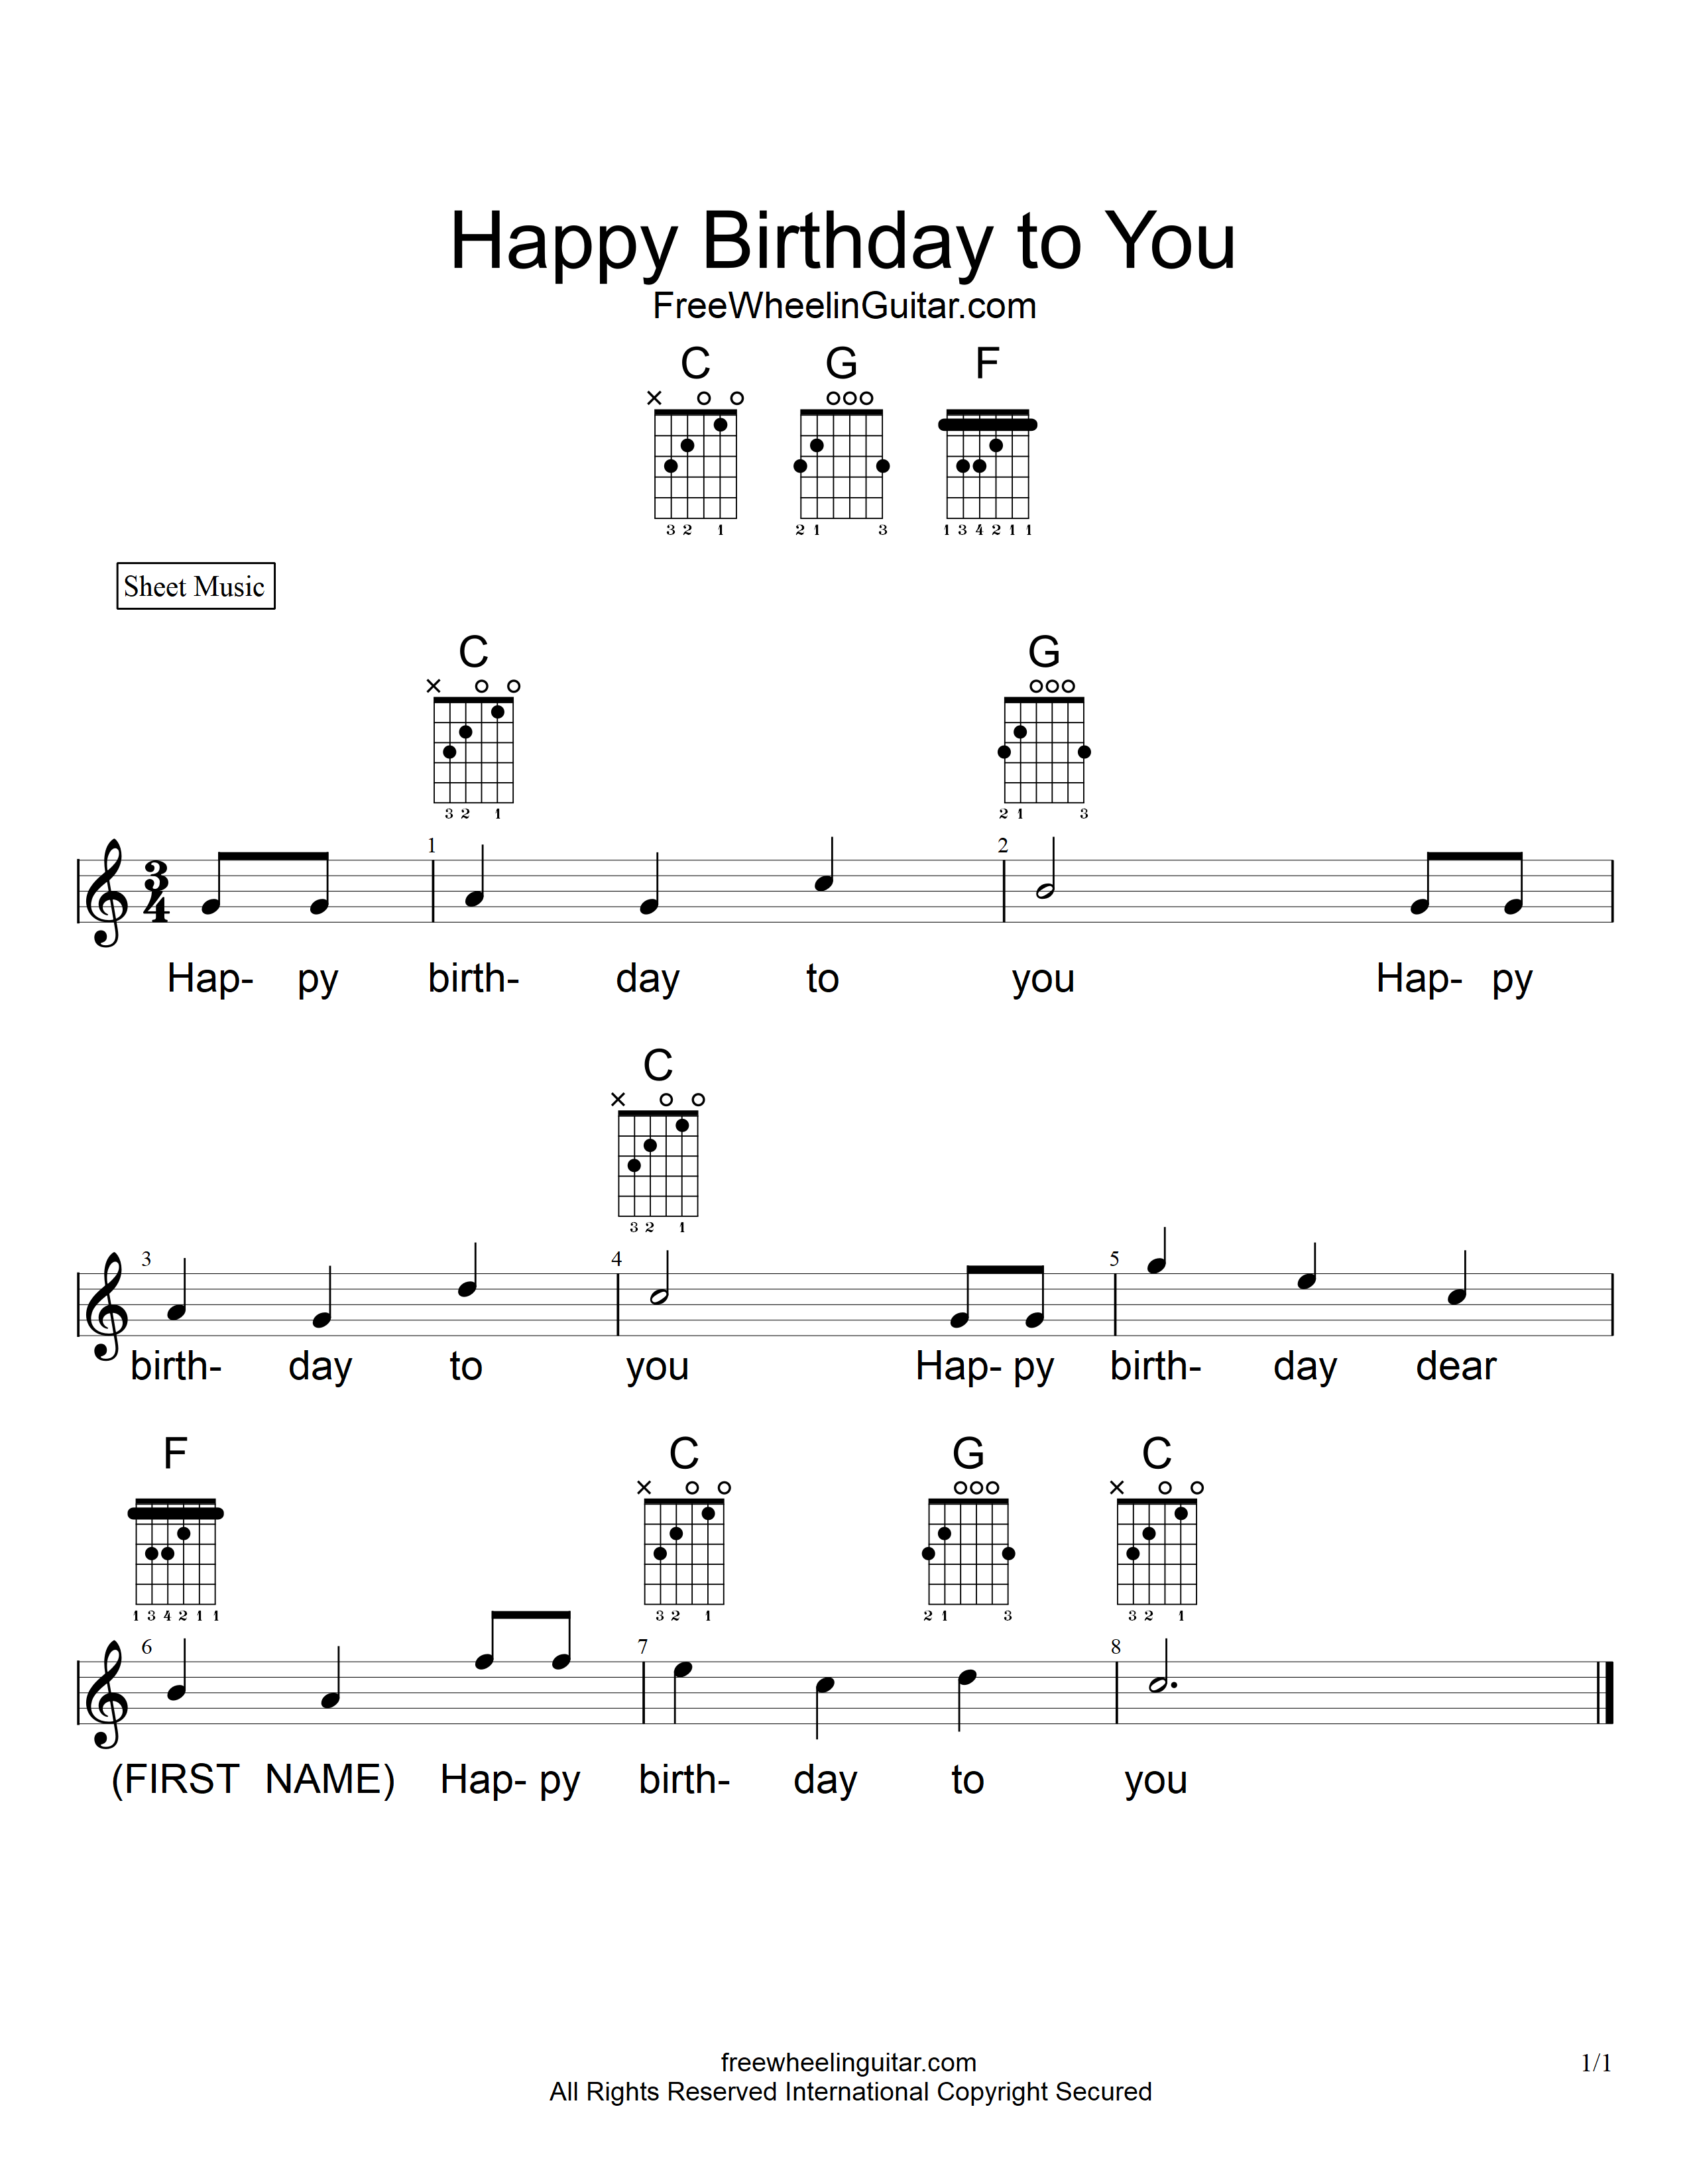 Happy Birthday - Sheet Music - FreewheelinGuitar.com